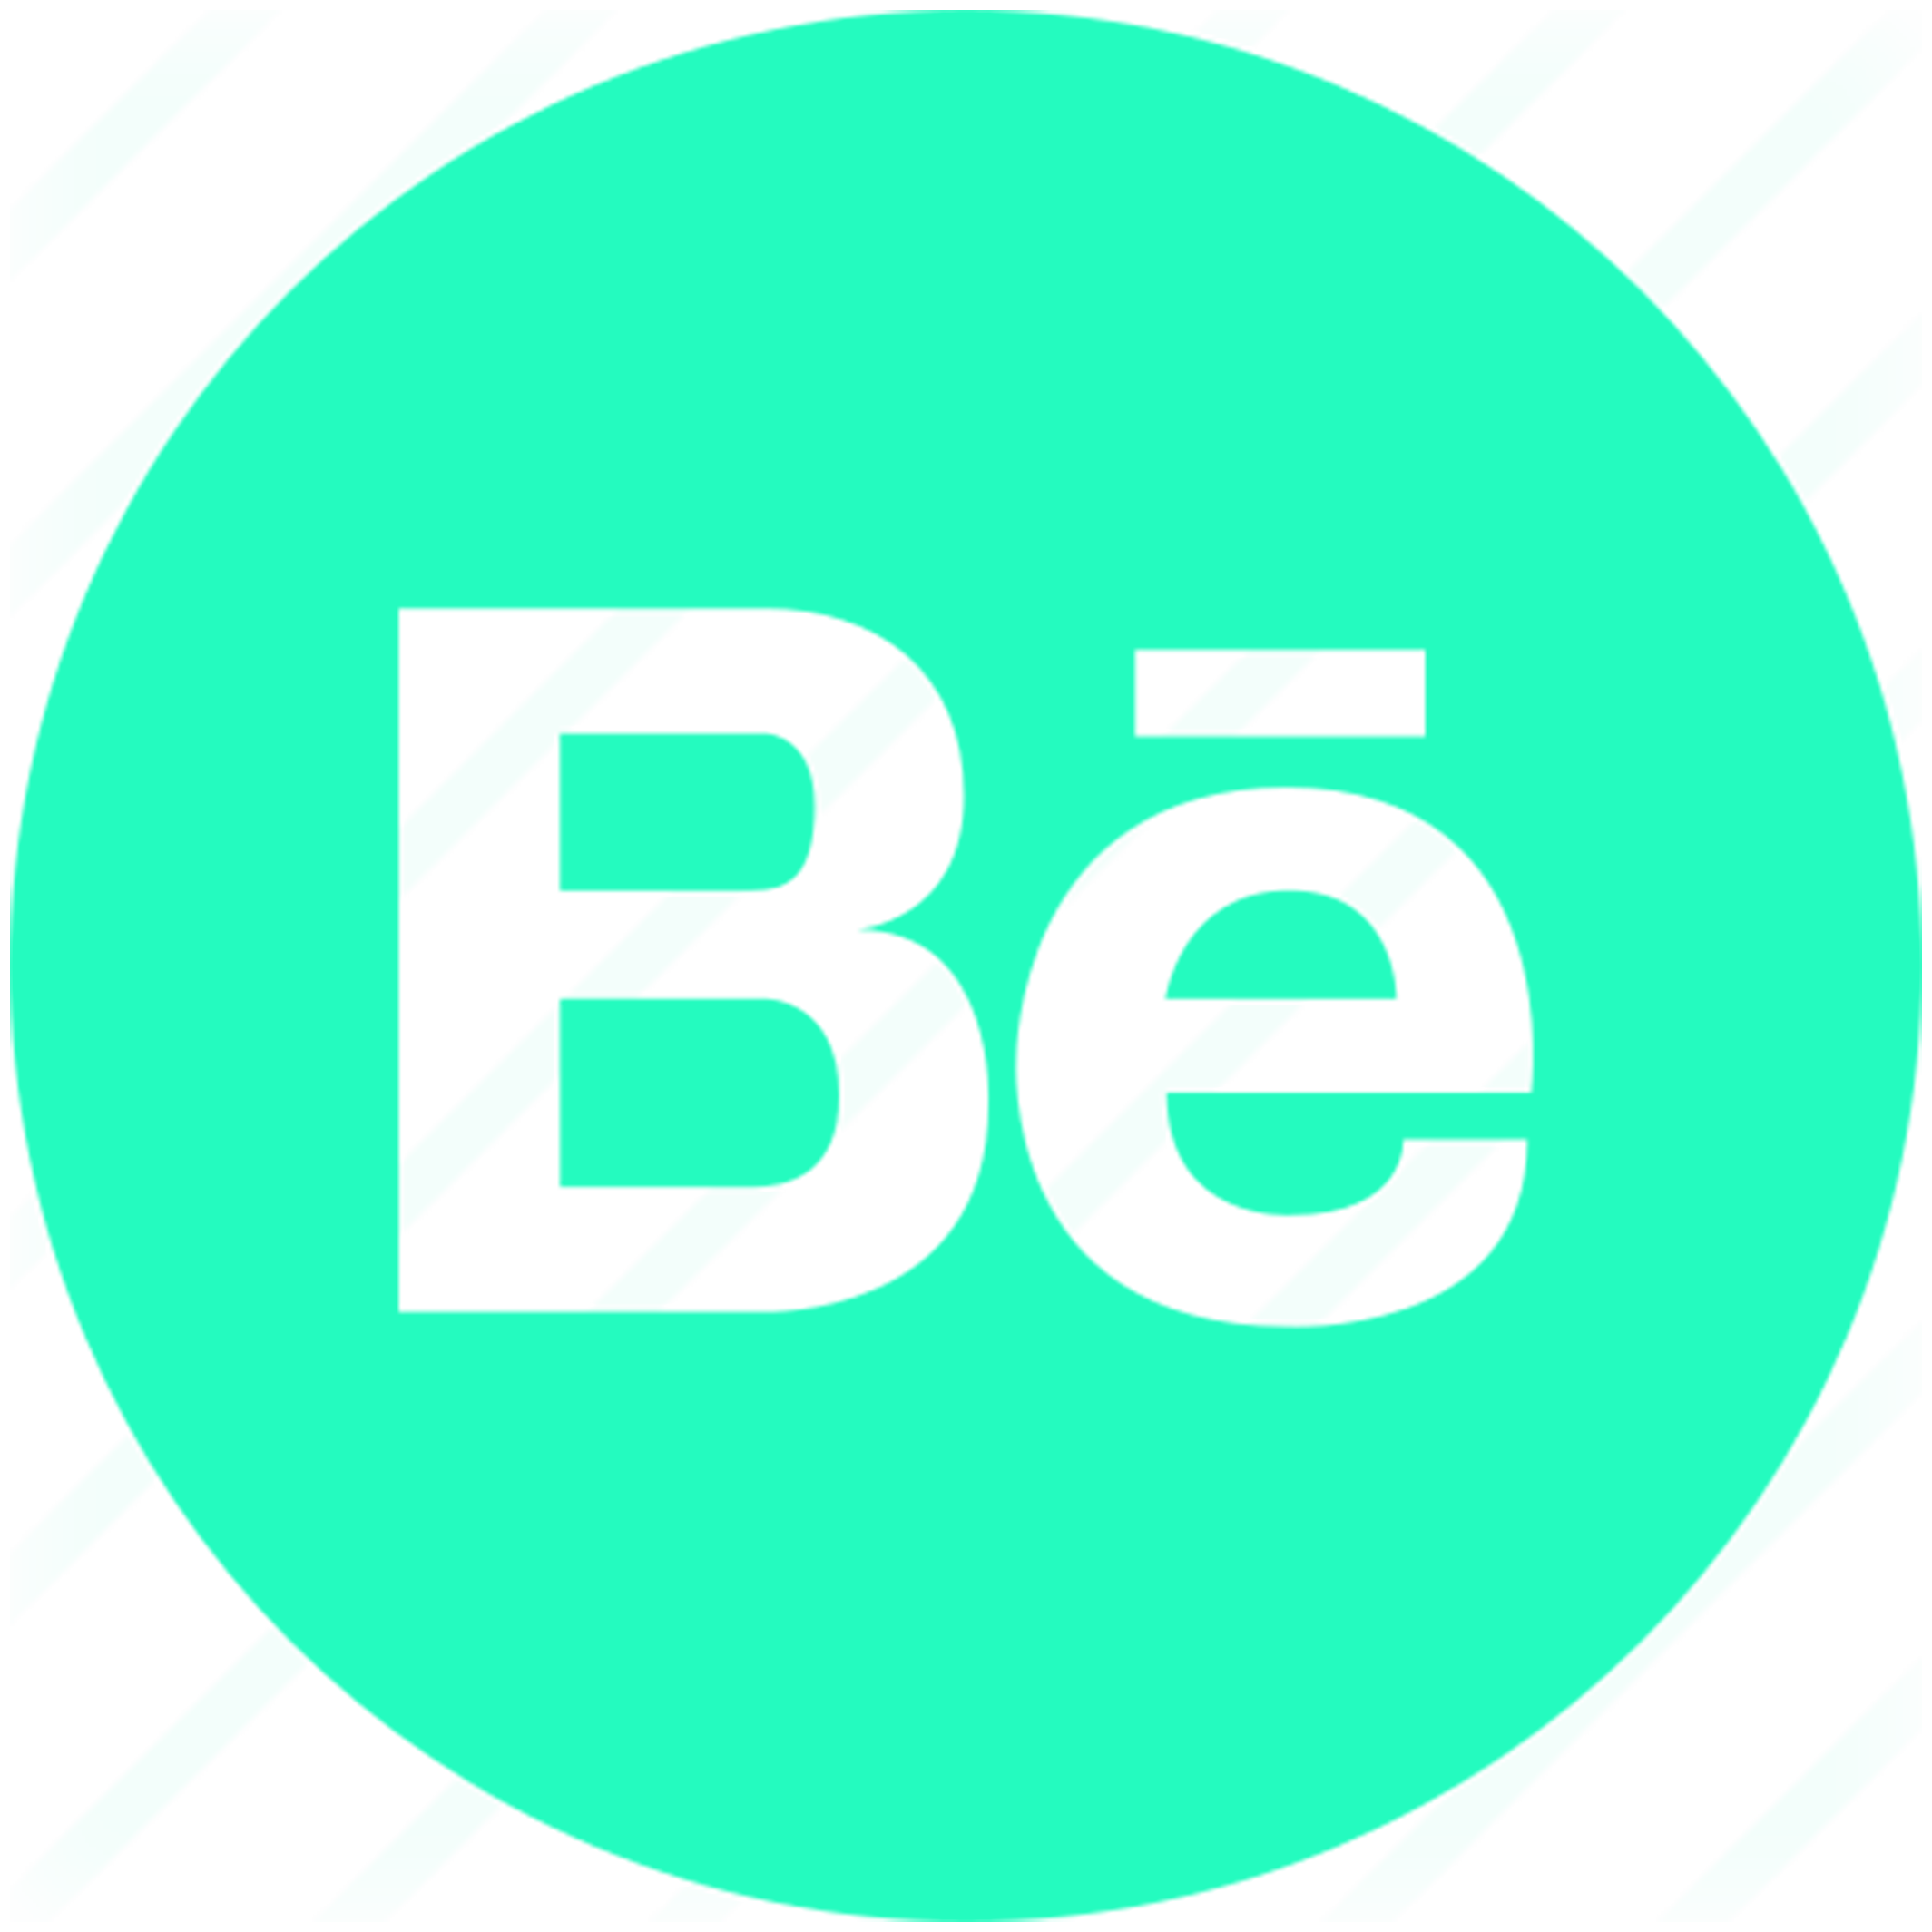 fixed-bar_behance-icon